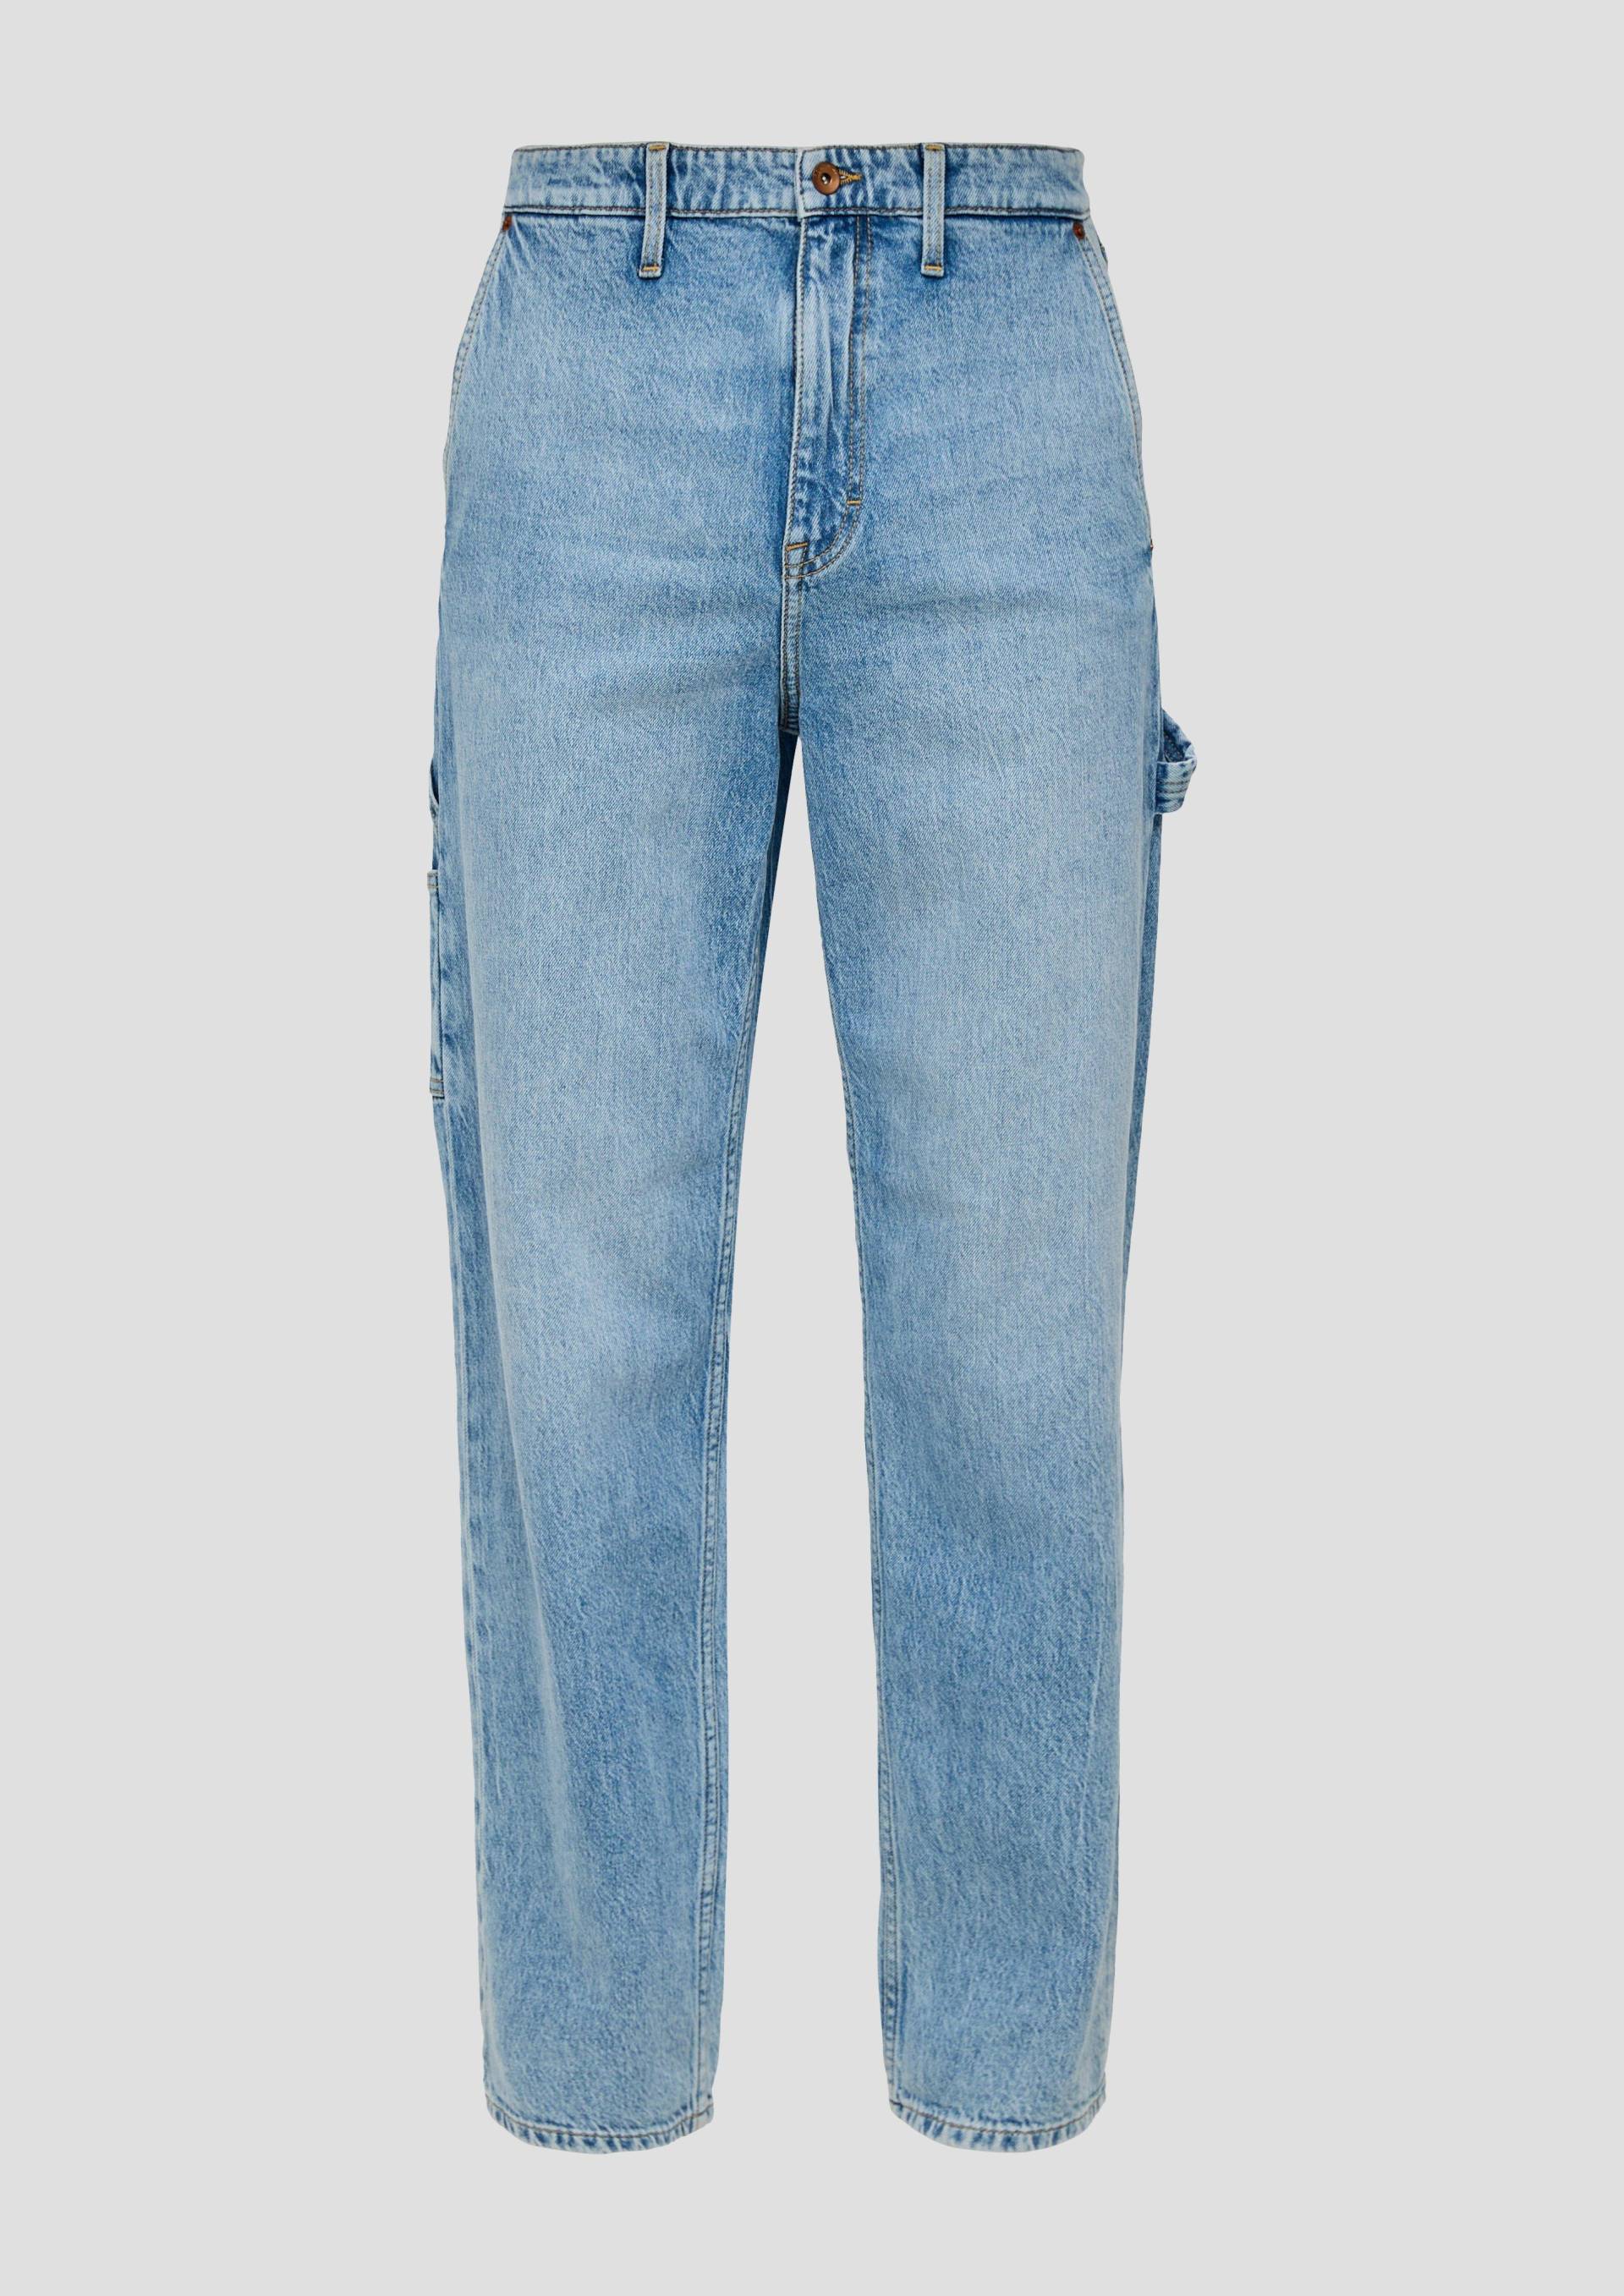 QS - Jeans / Loose Fit / Mid Rise / Straight Leg, Herren, blau von QS